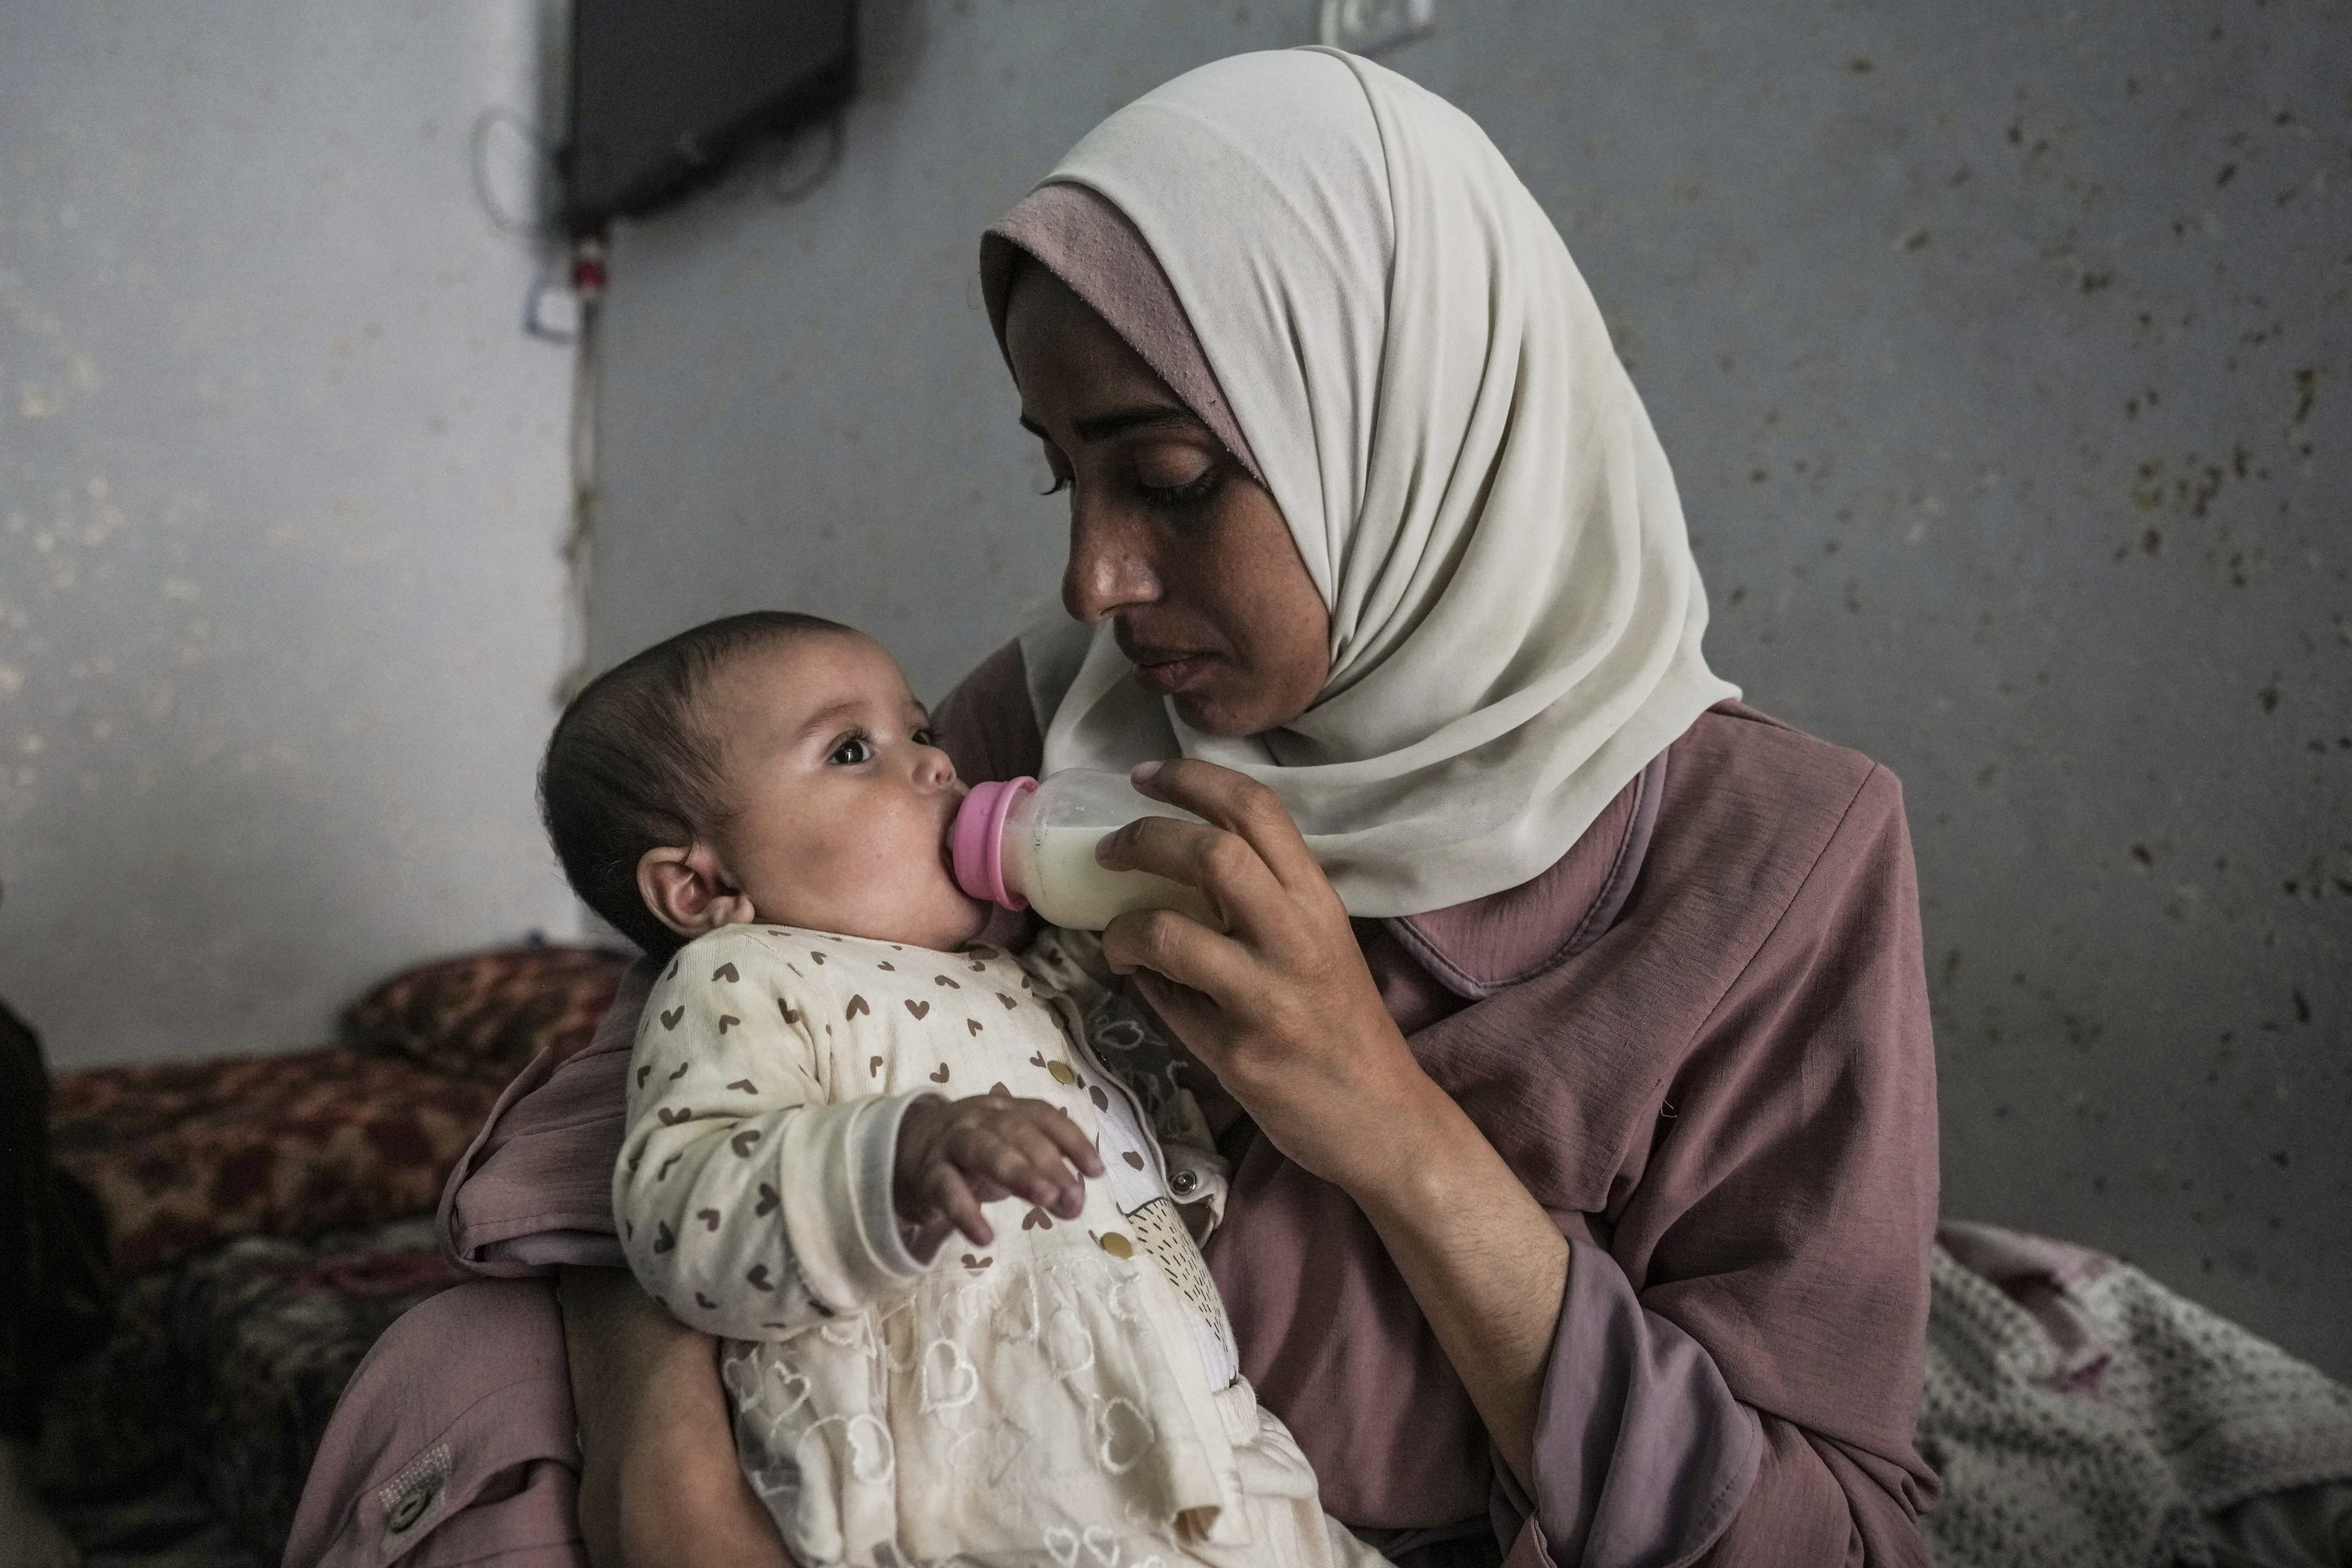 Rola Saqer feeds her baby Masa Mohammad Zaqout in the neighbourhood of Zawaida, central Gaza, on April 4. Photo: AP 

